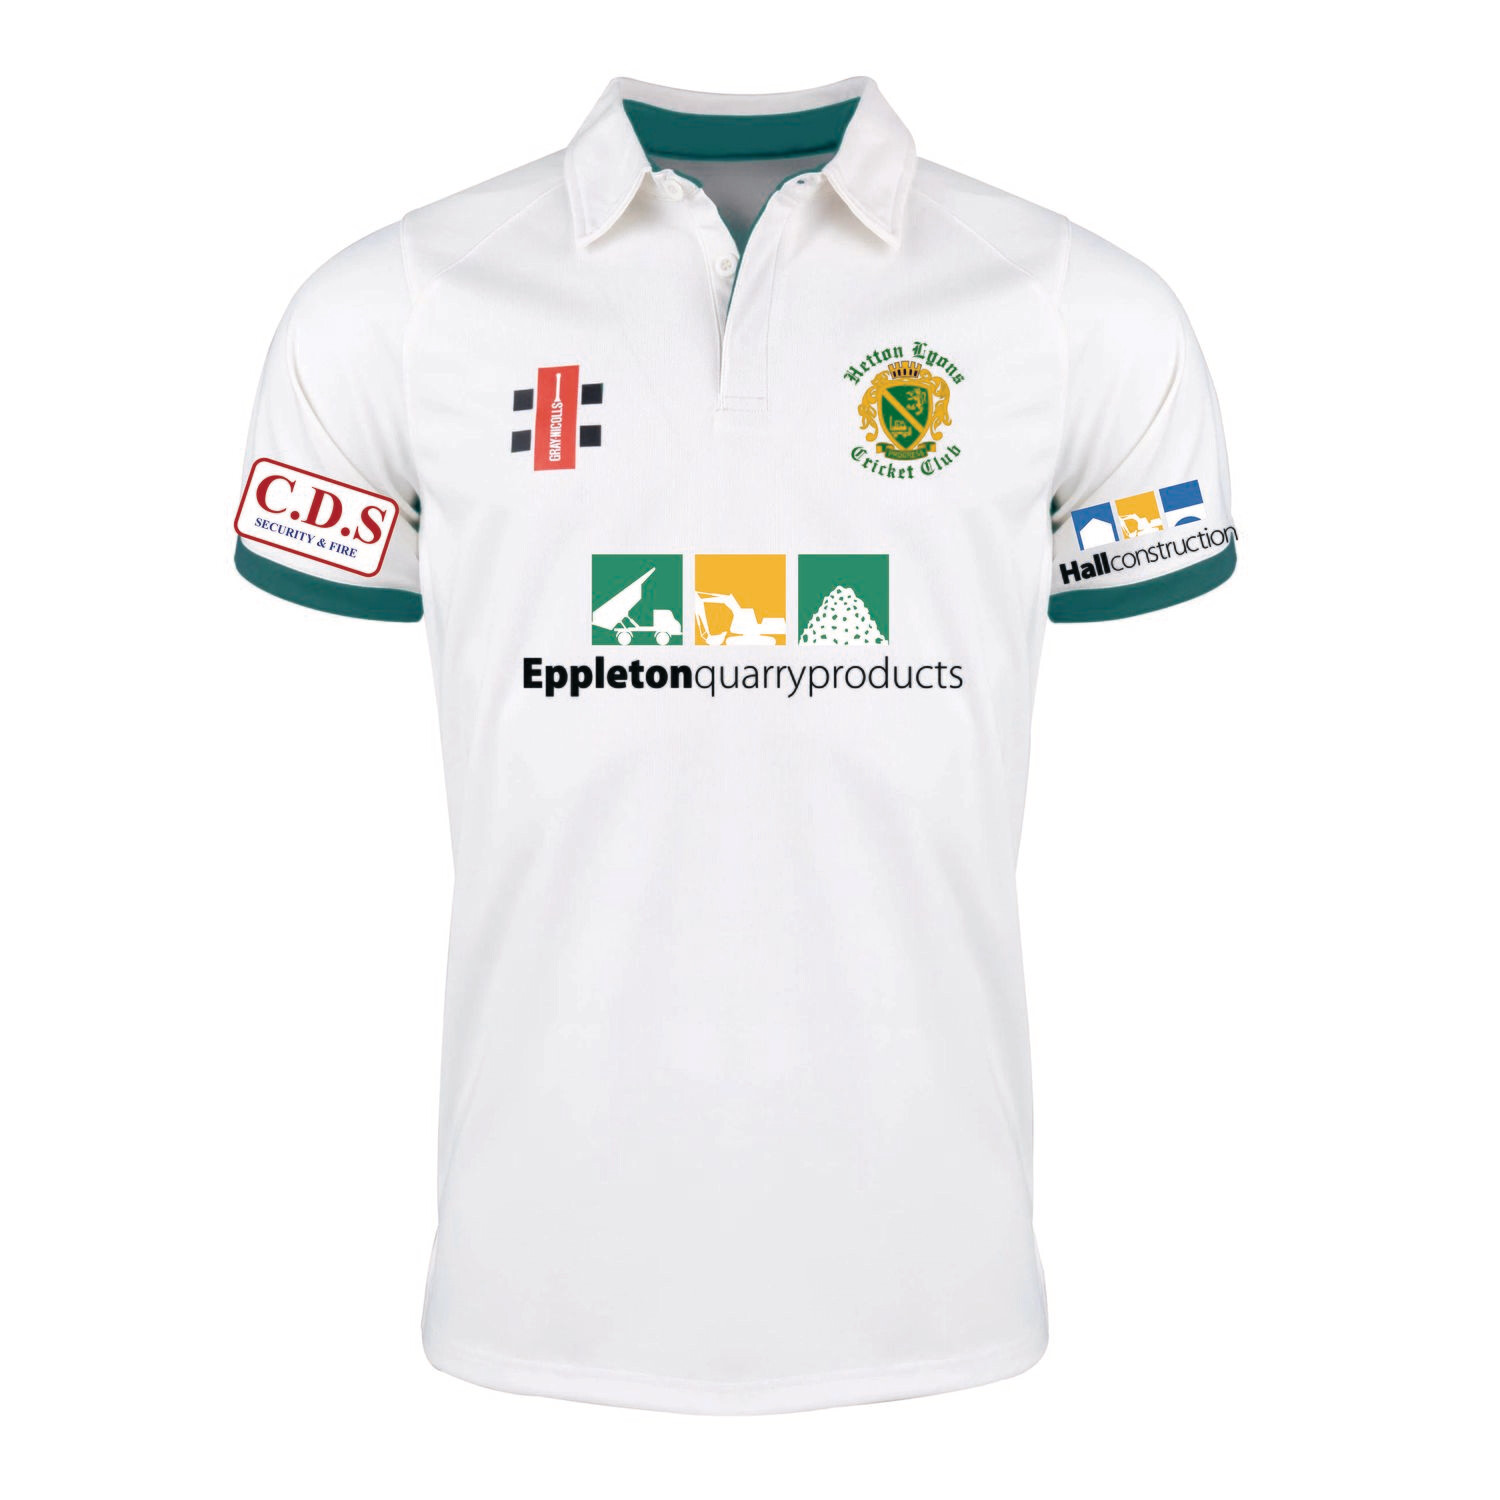 Hetton Lyons Pro Performance V2 Short Sleeve Cricket Shirt